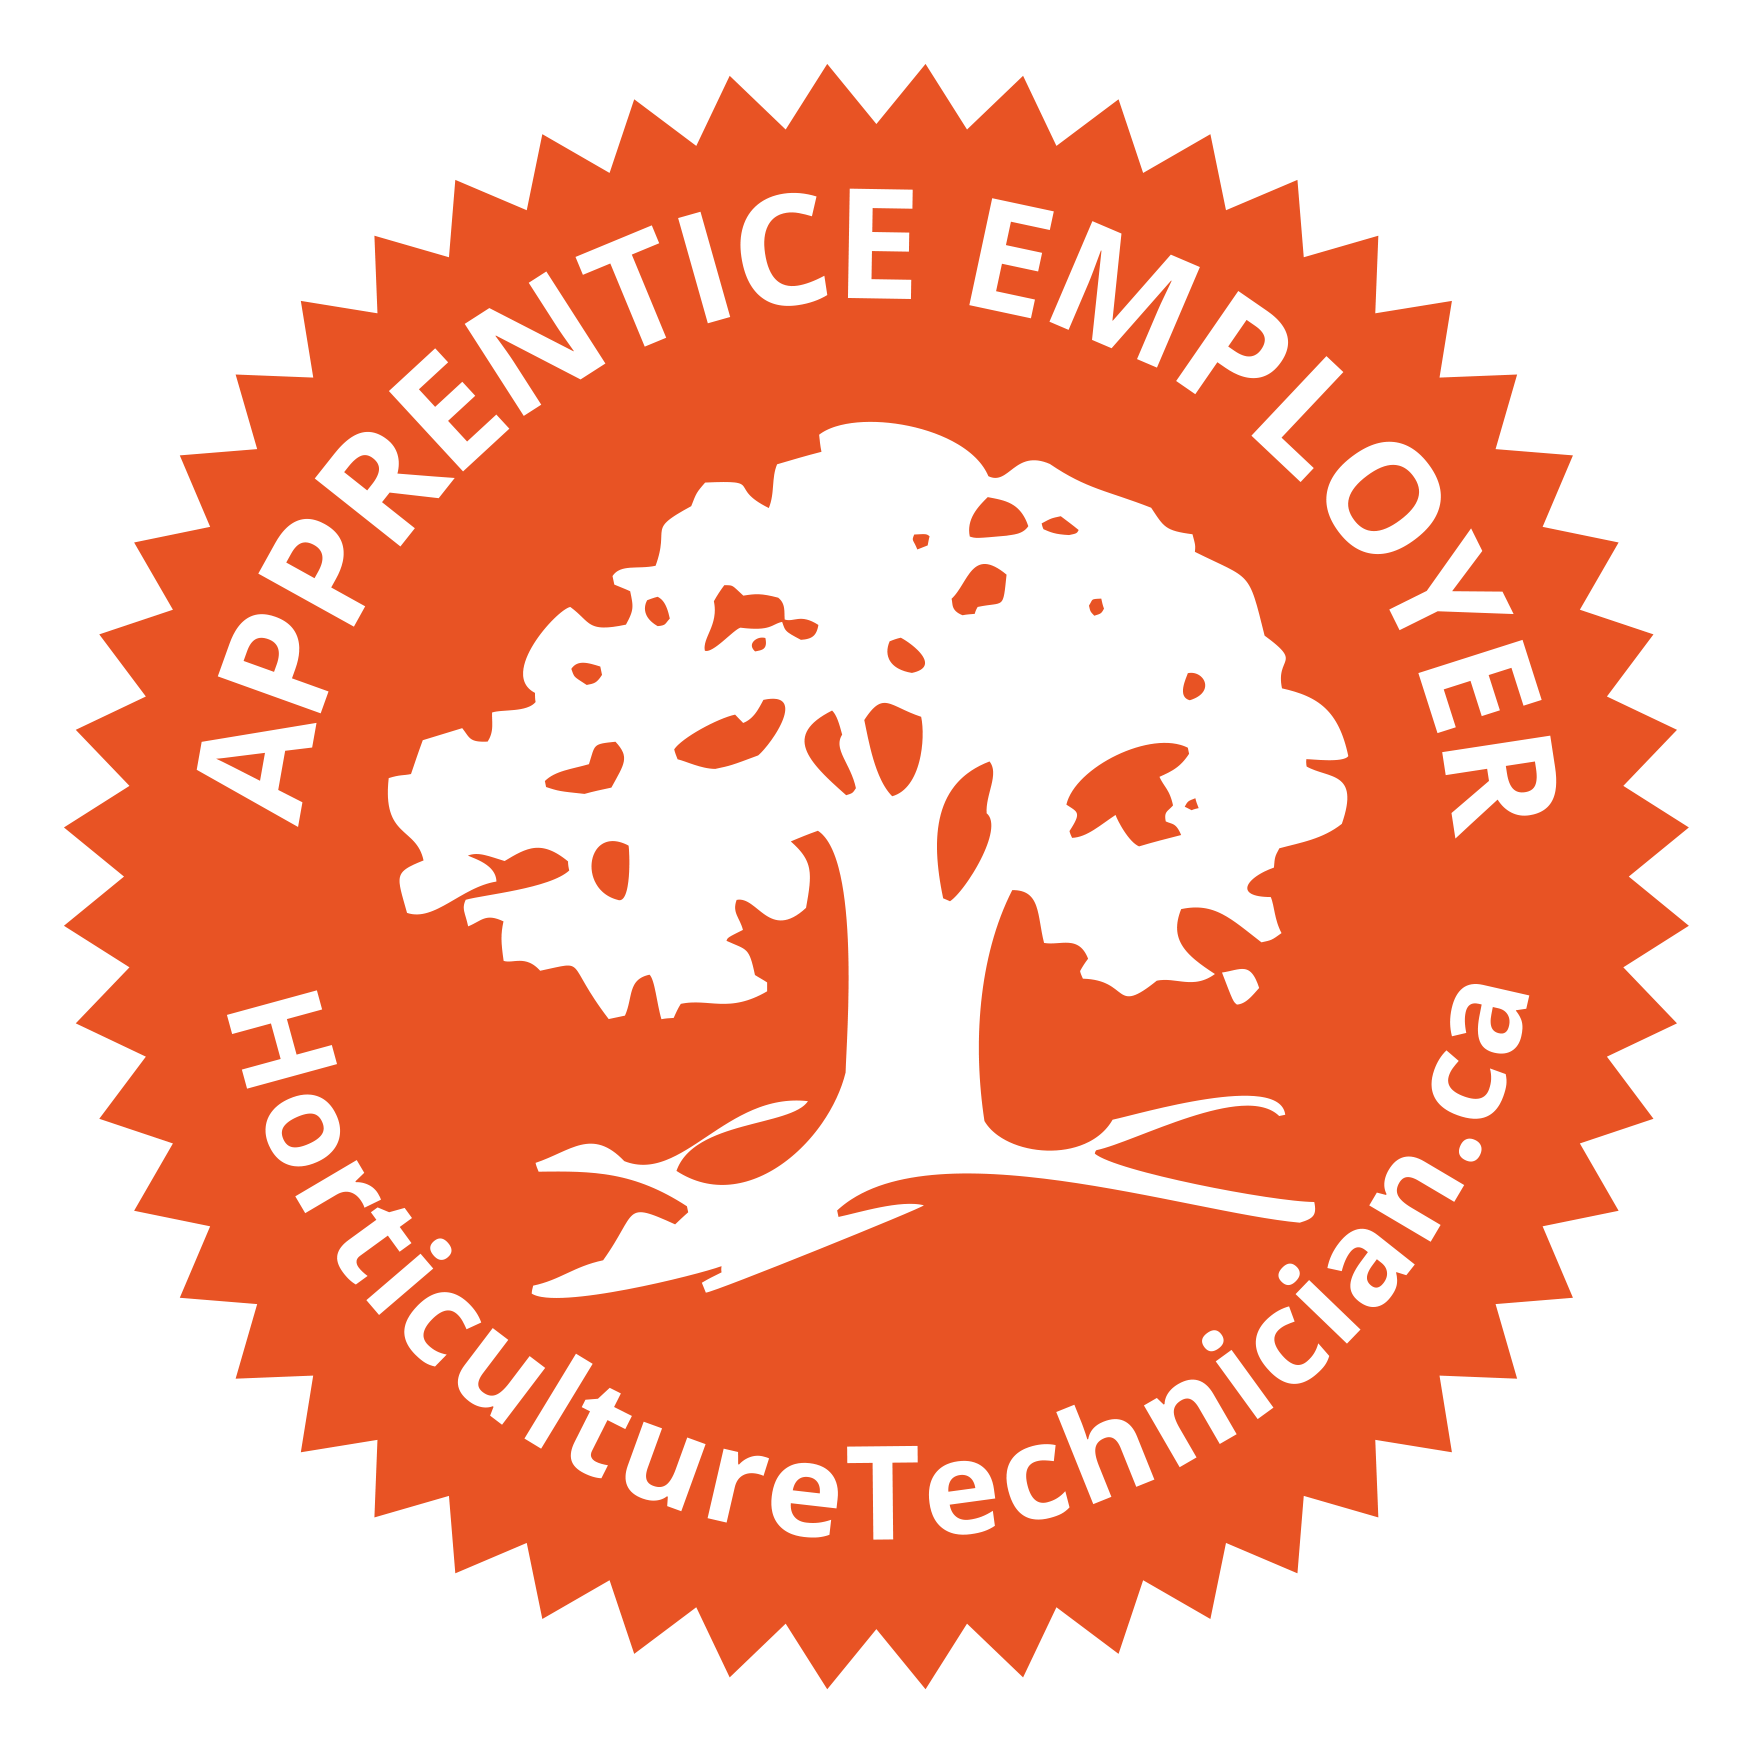 HoricultureTechnician.ca apprentice employer badge